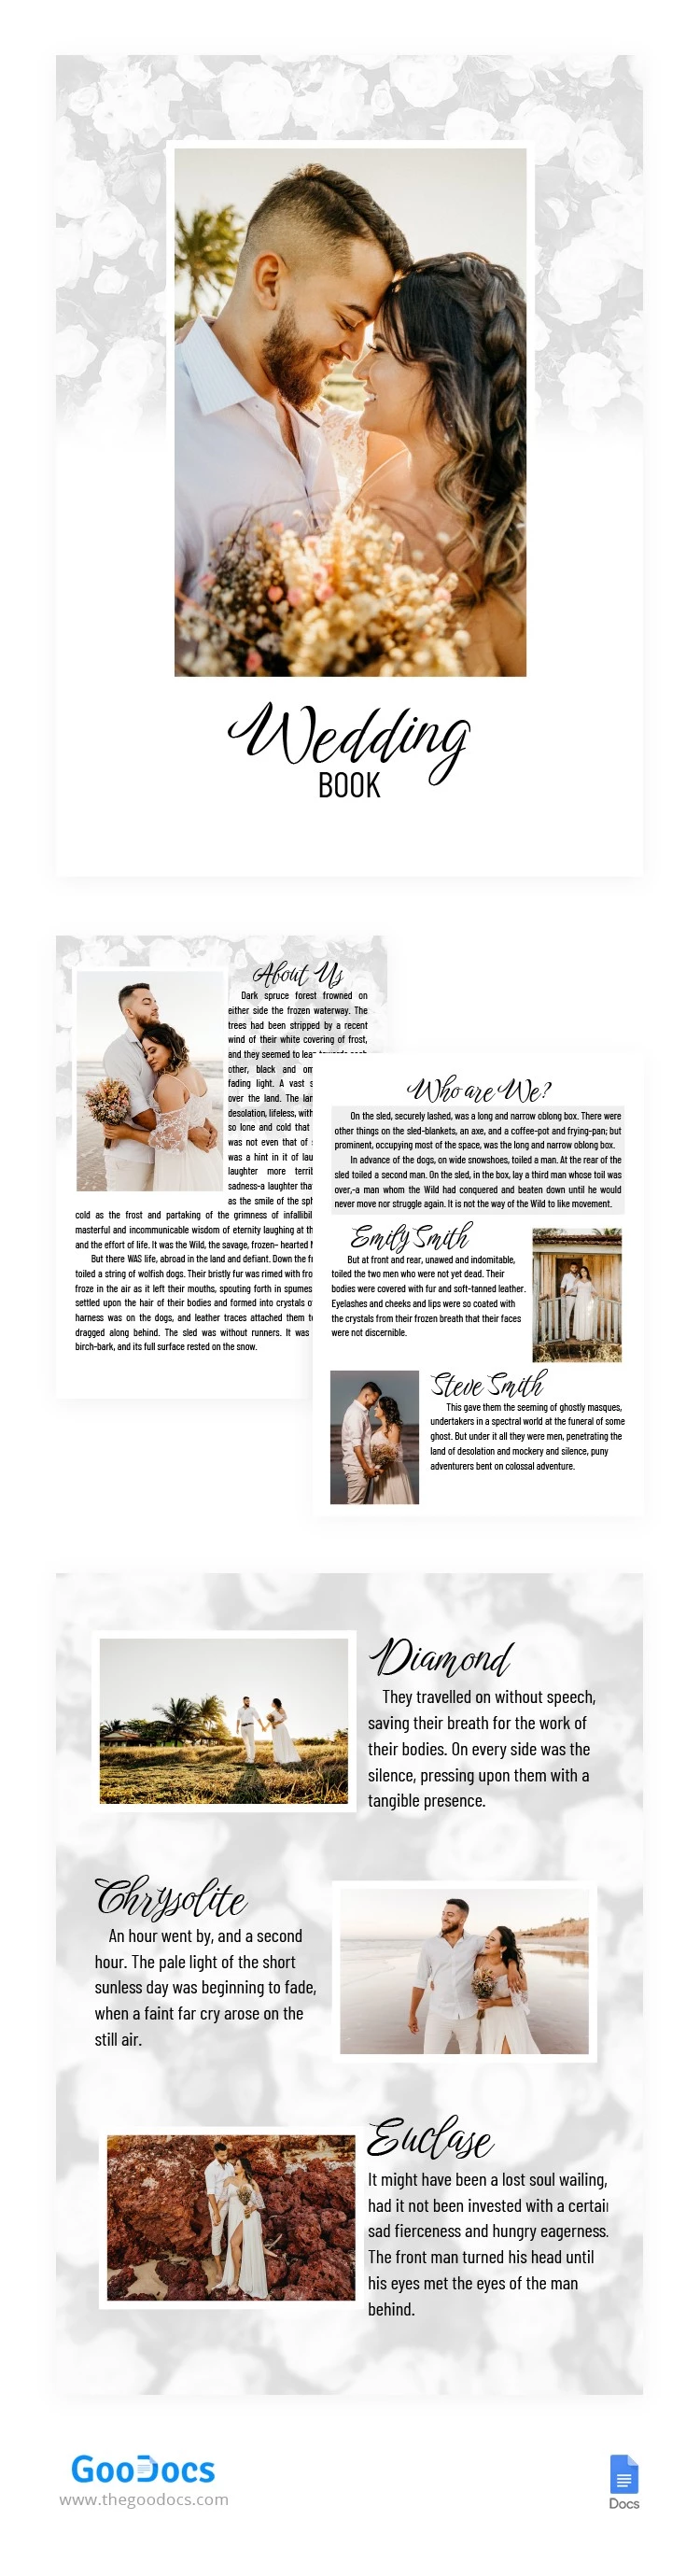 Blumiges Hochzeitsbuch - free Google Docs Template - 10064683